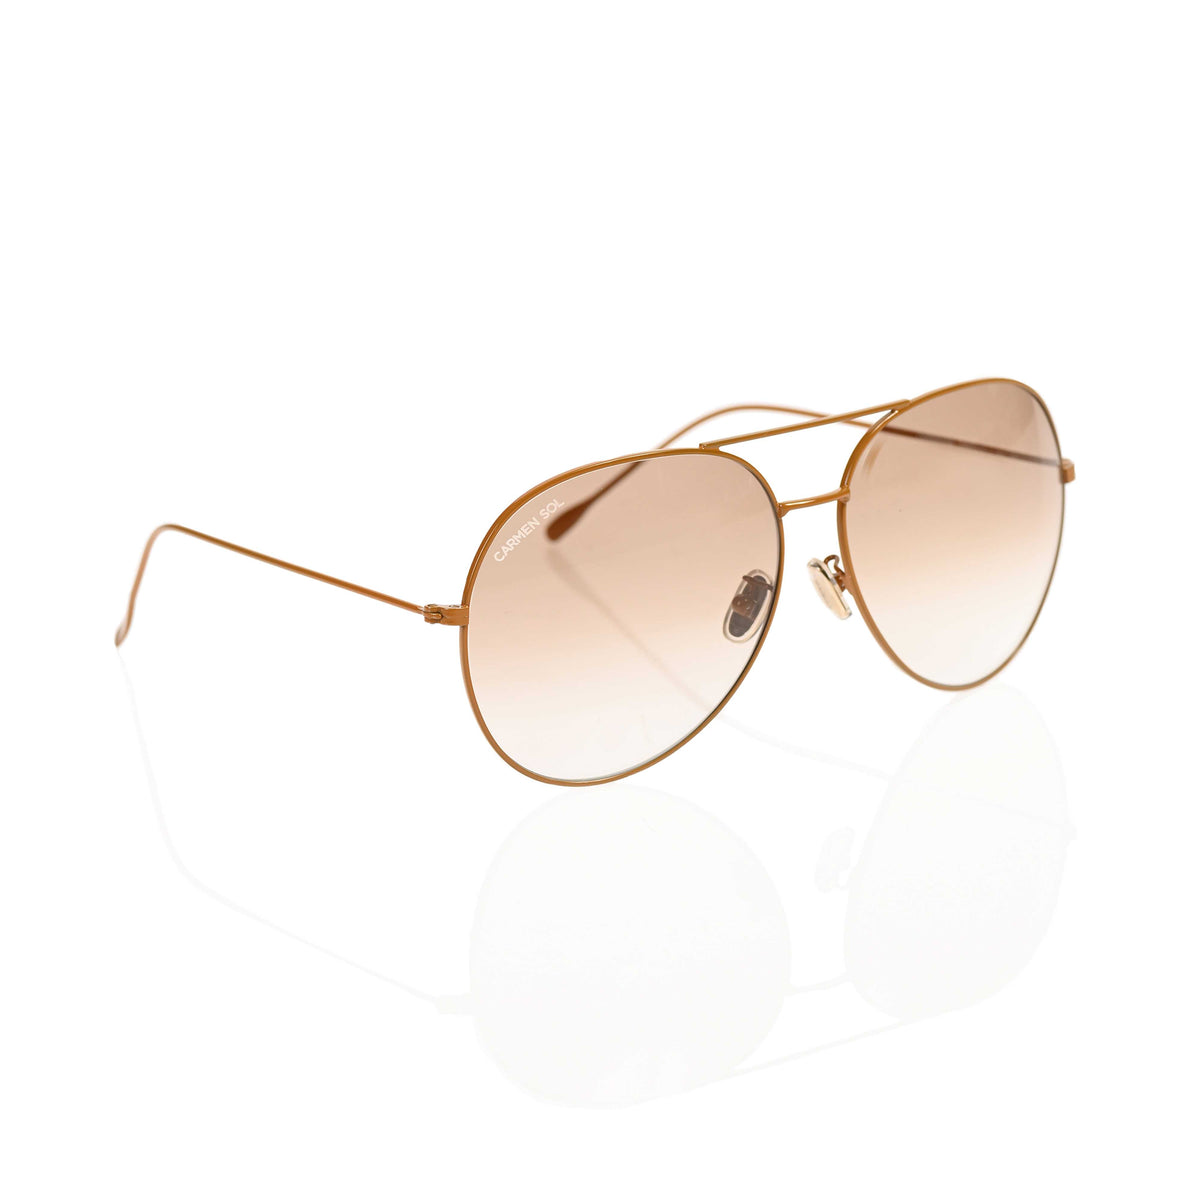 Nude sunglasses for women from Carmen Sol, Aviator sunglasses